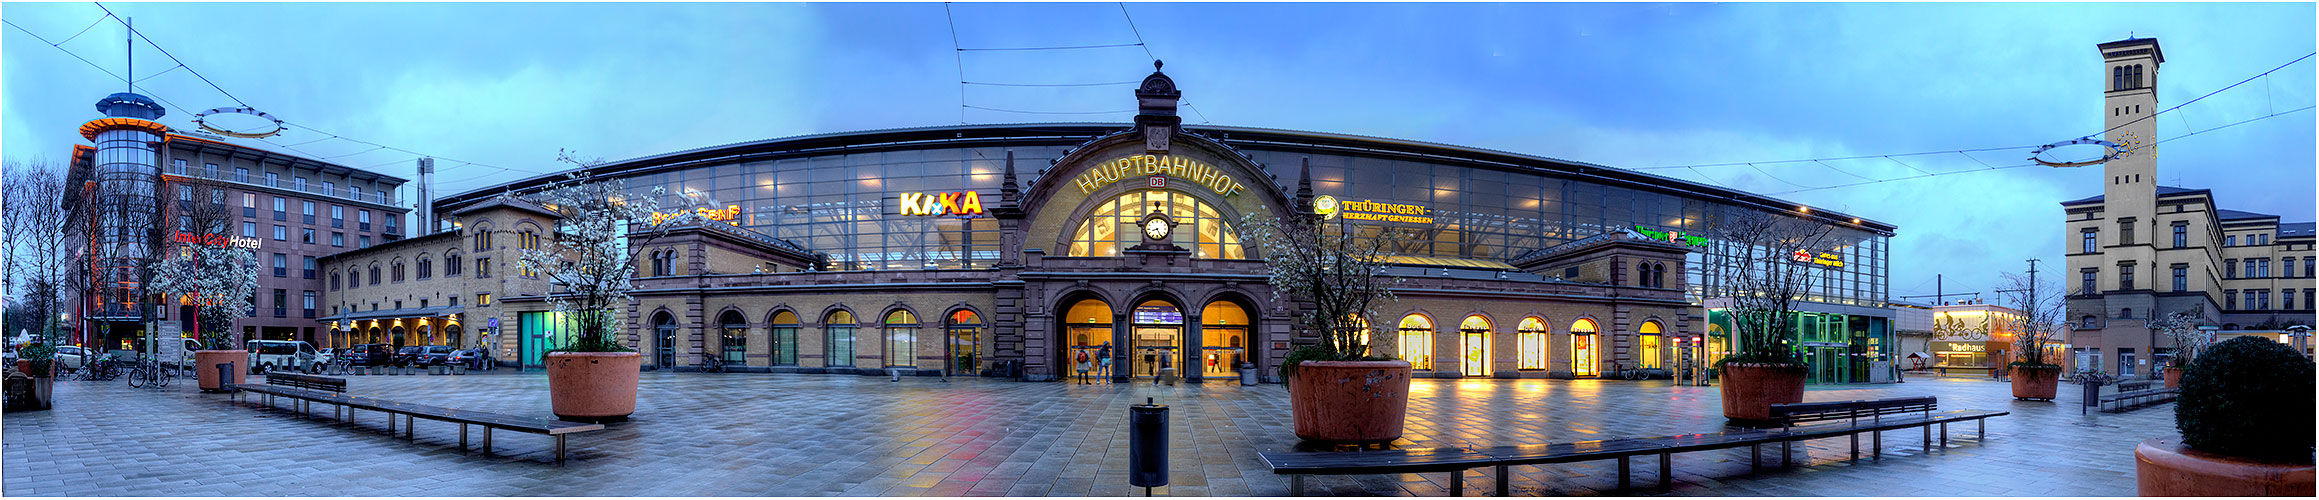 ... Erfurt Hauptbahnhof ...